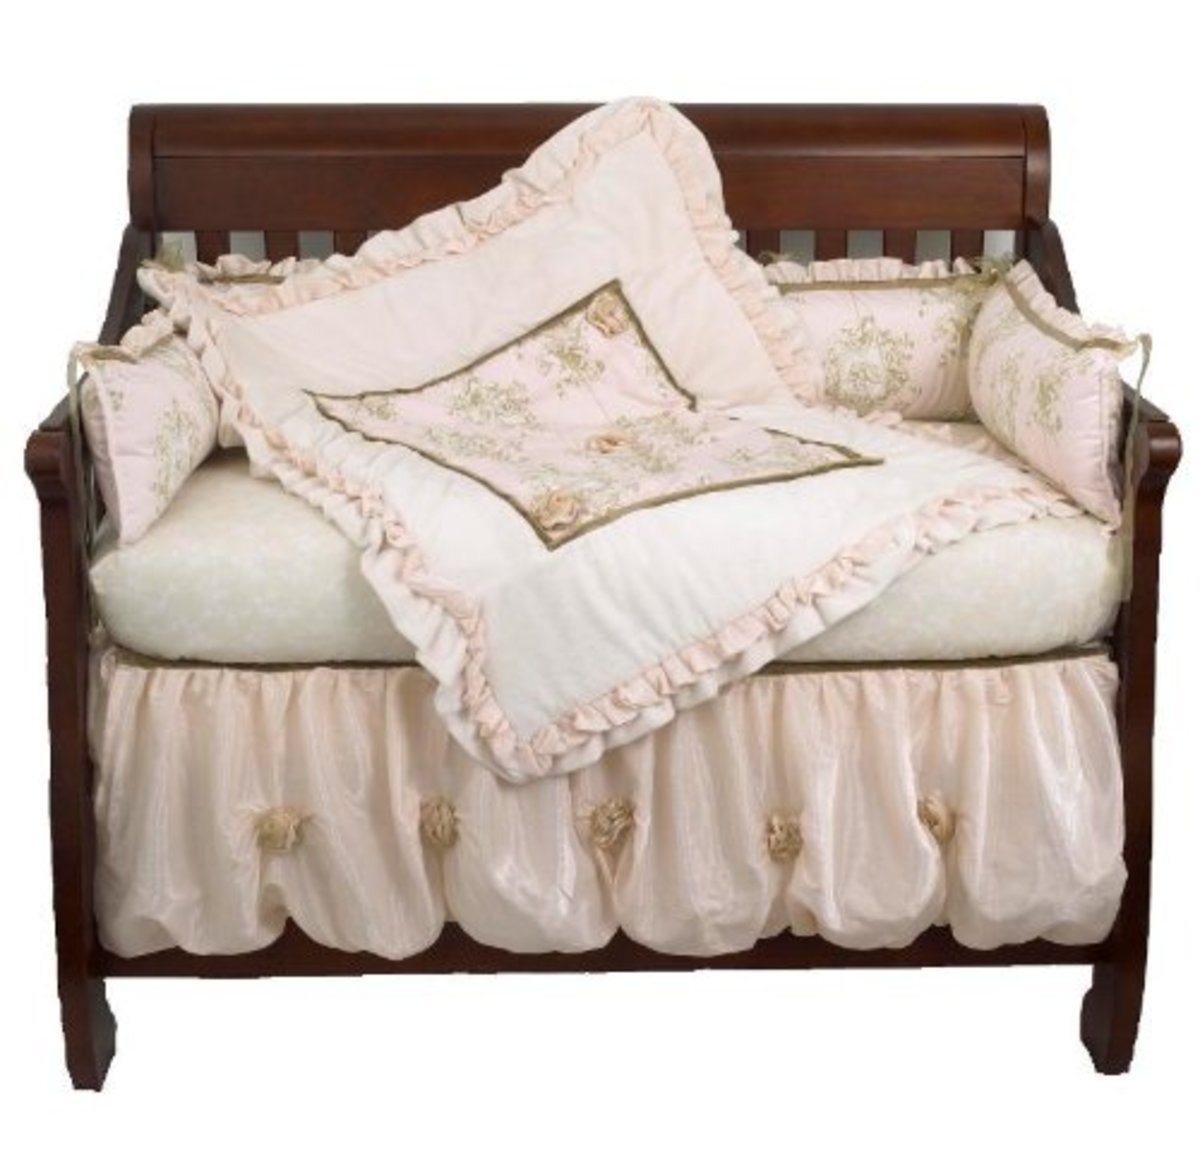 3-and-4-piece-mini-crib-bedding-sets-for-girls-nursery-room